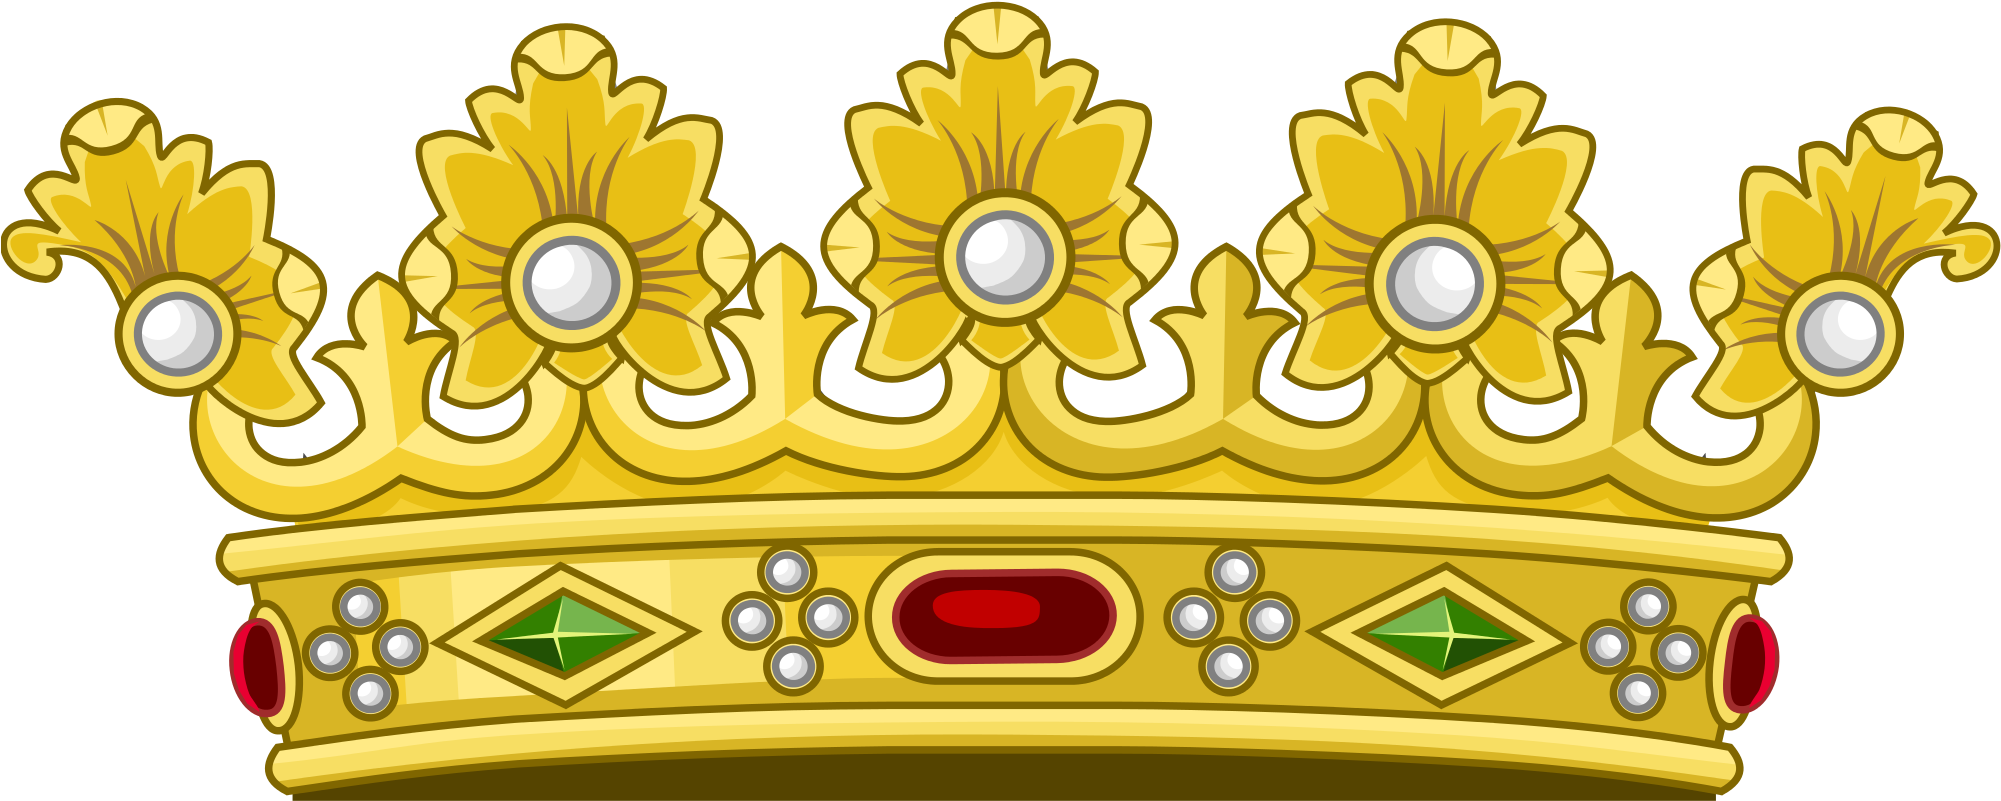 King Crown Cartoon 25, - Medieval Coat Of Arms (2000x813)